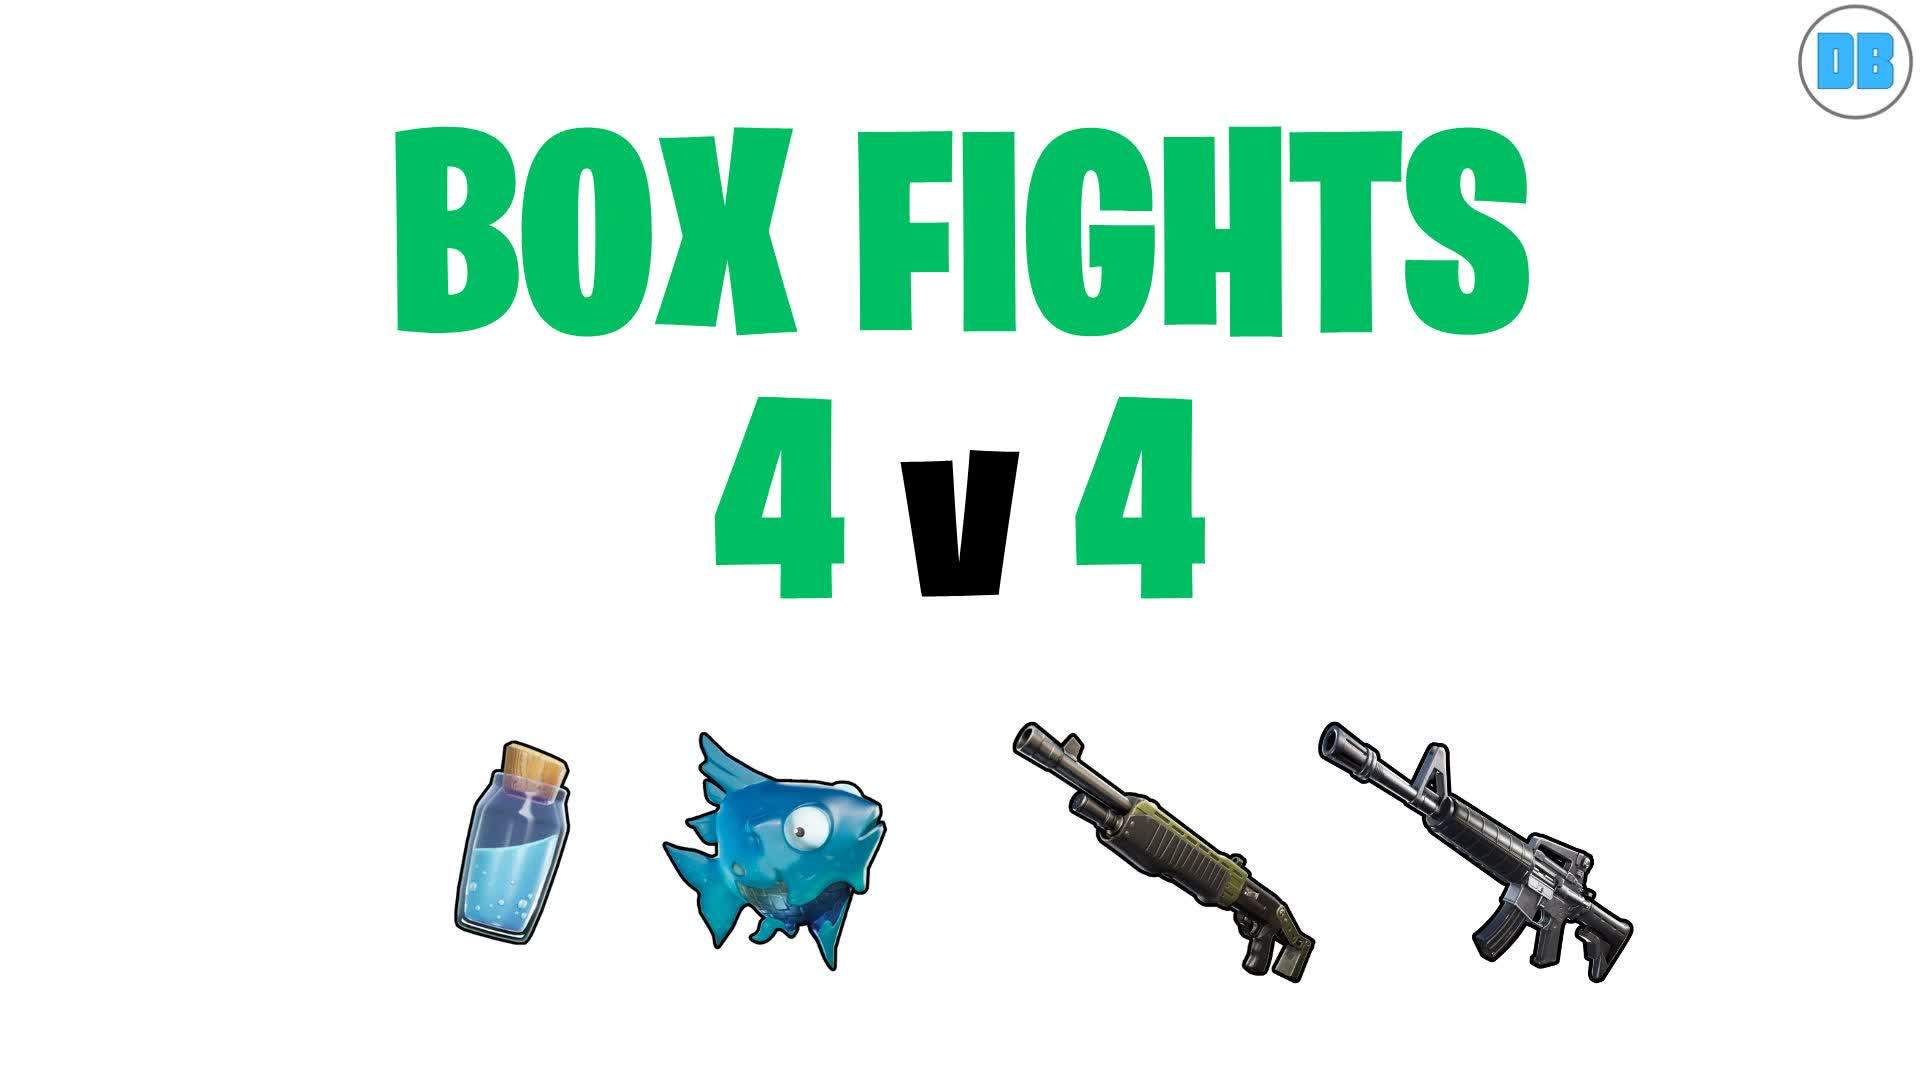 4v4 BOX FIGHT